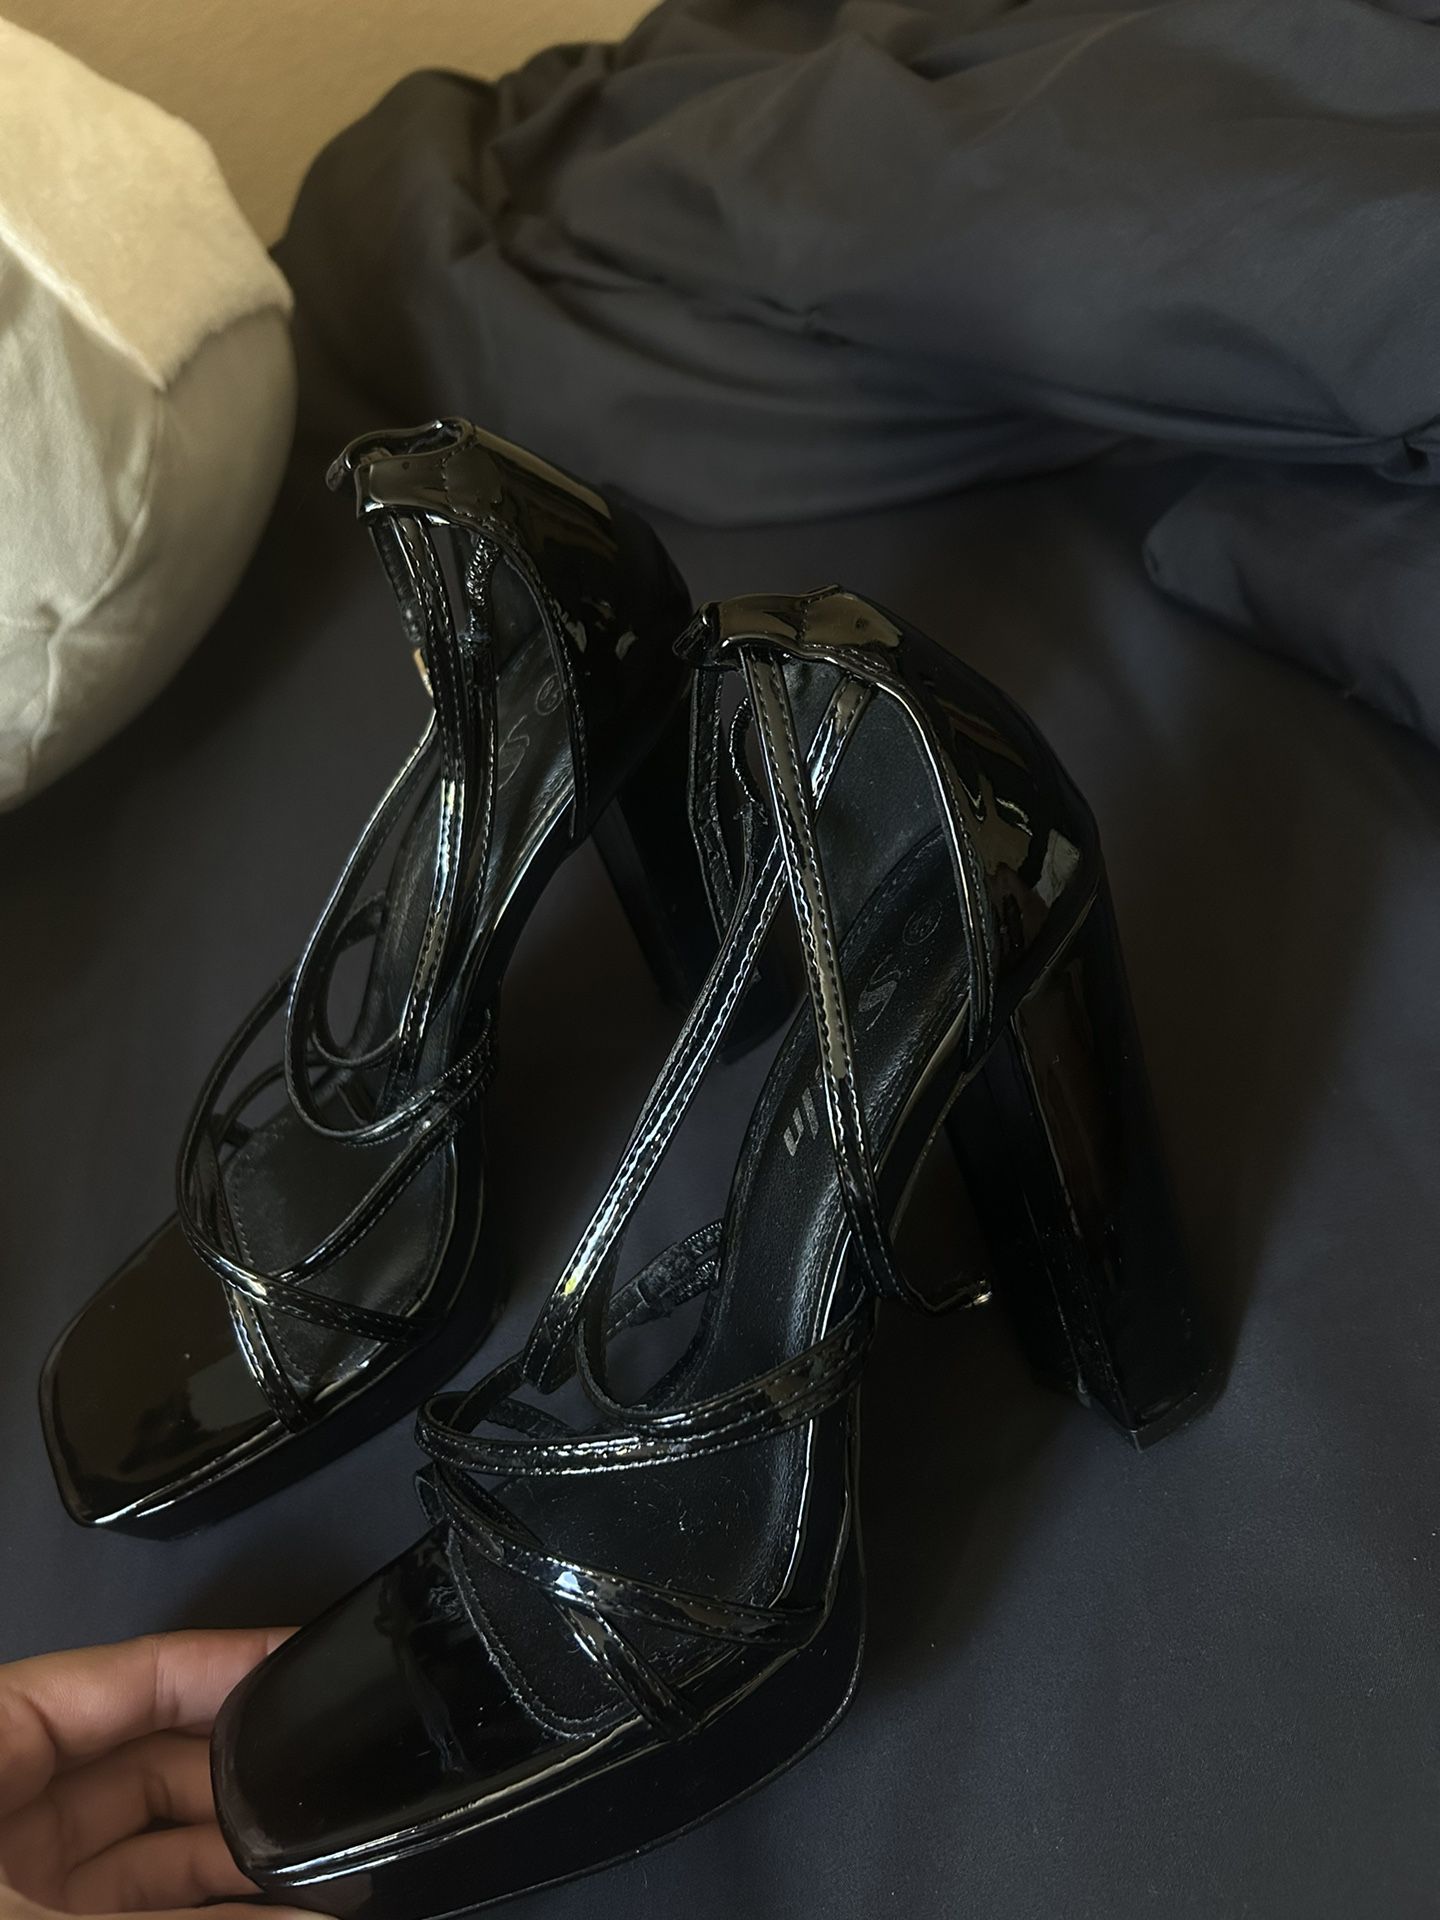 Black Heels Size 8.5